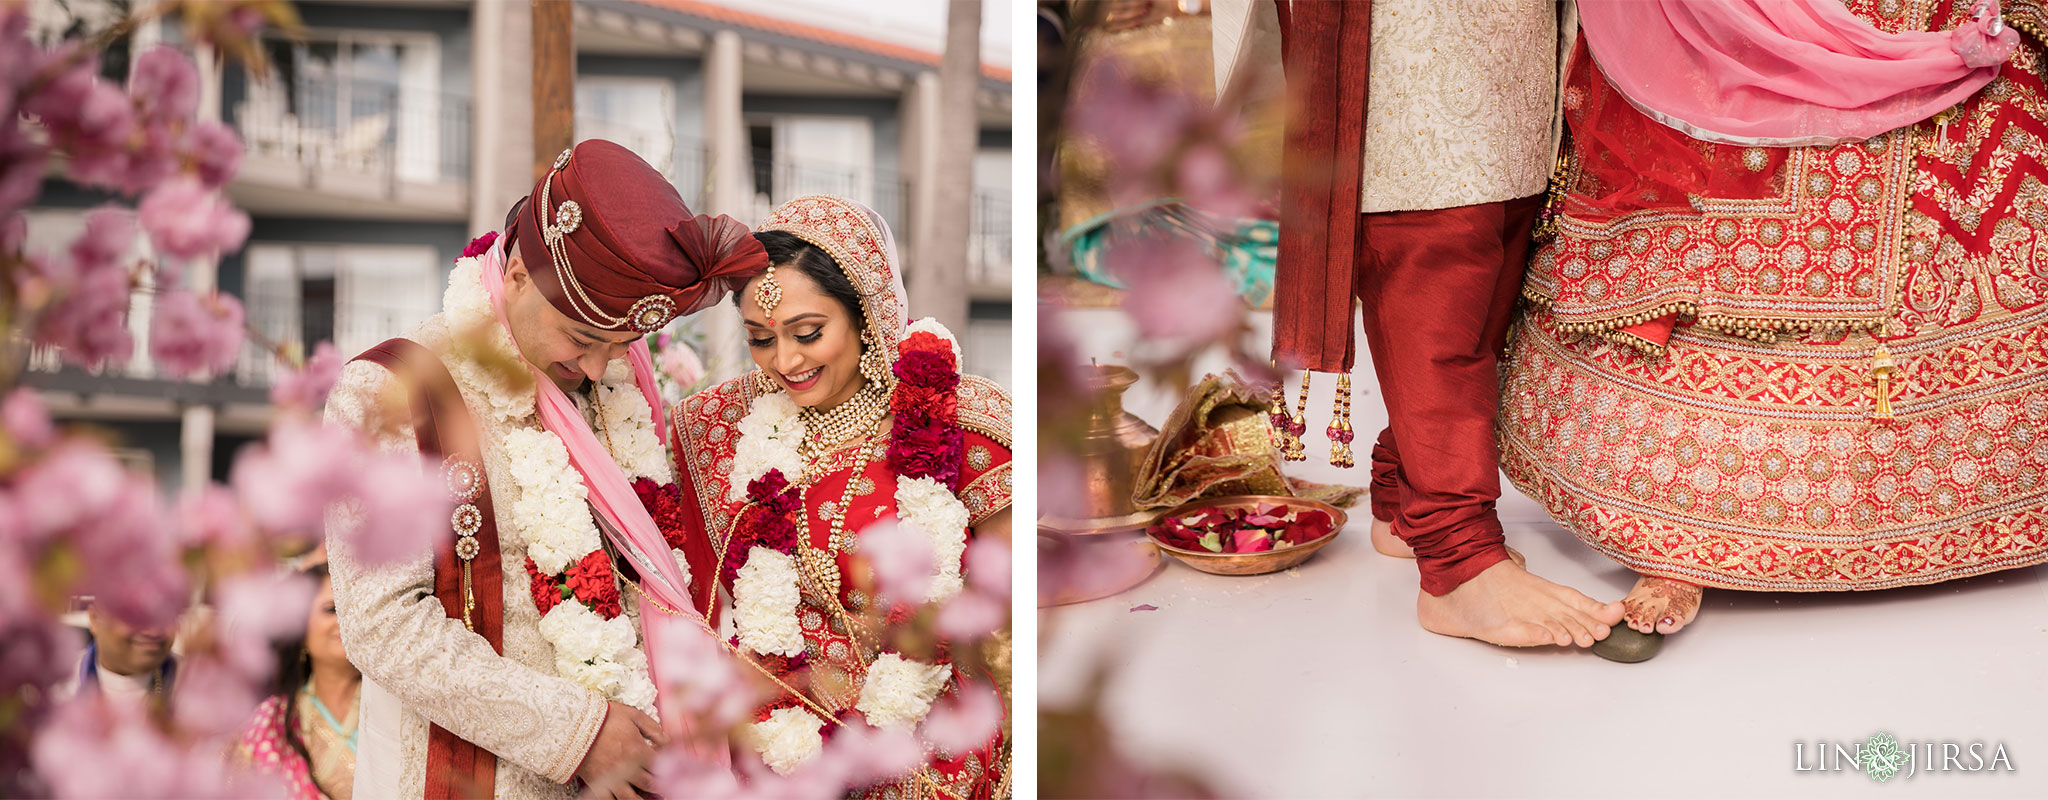 26 loews coronado bay resort indian wedding ceremony photography